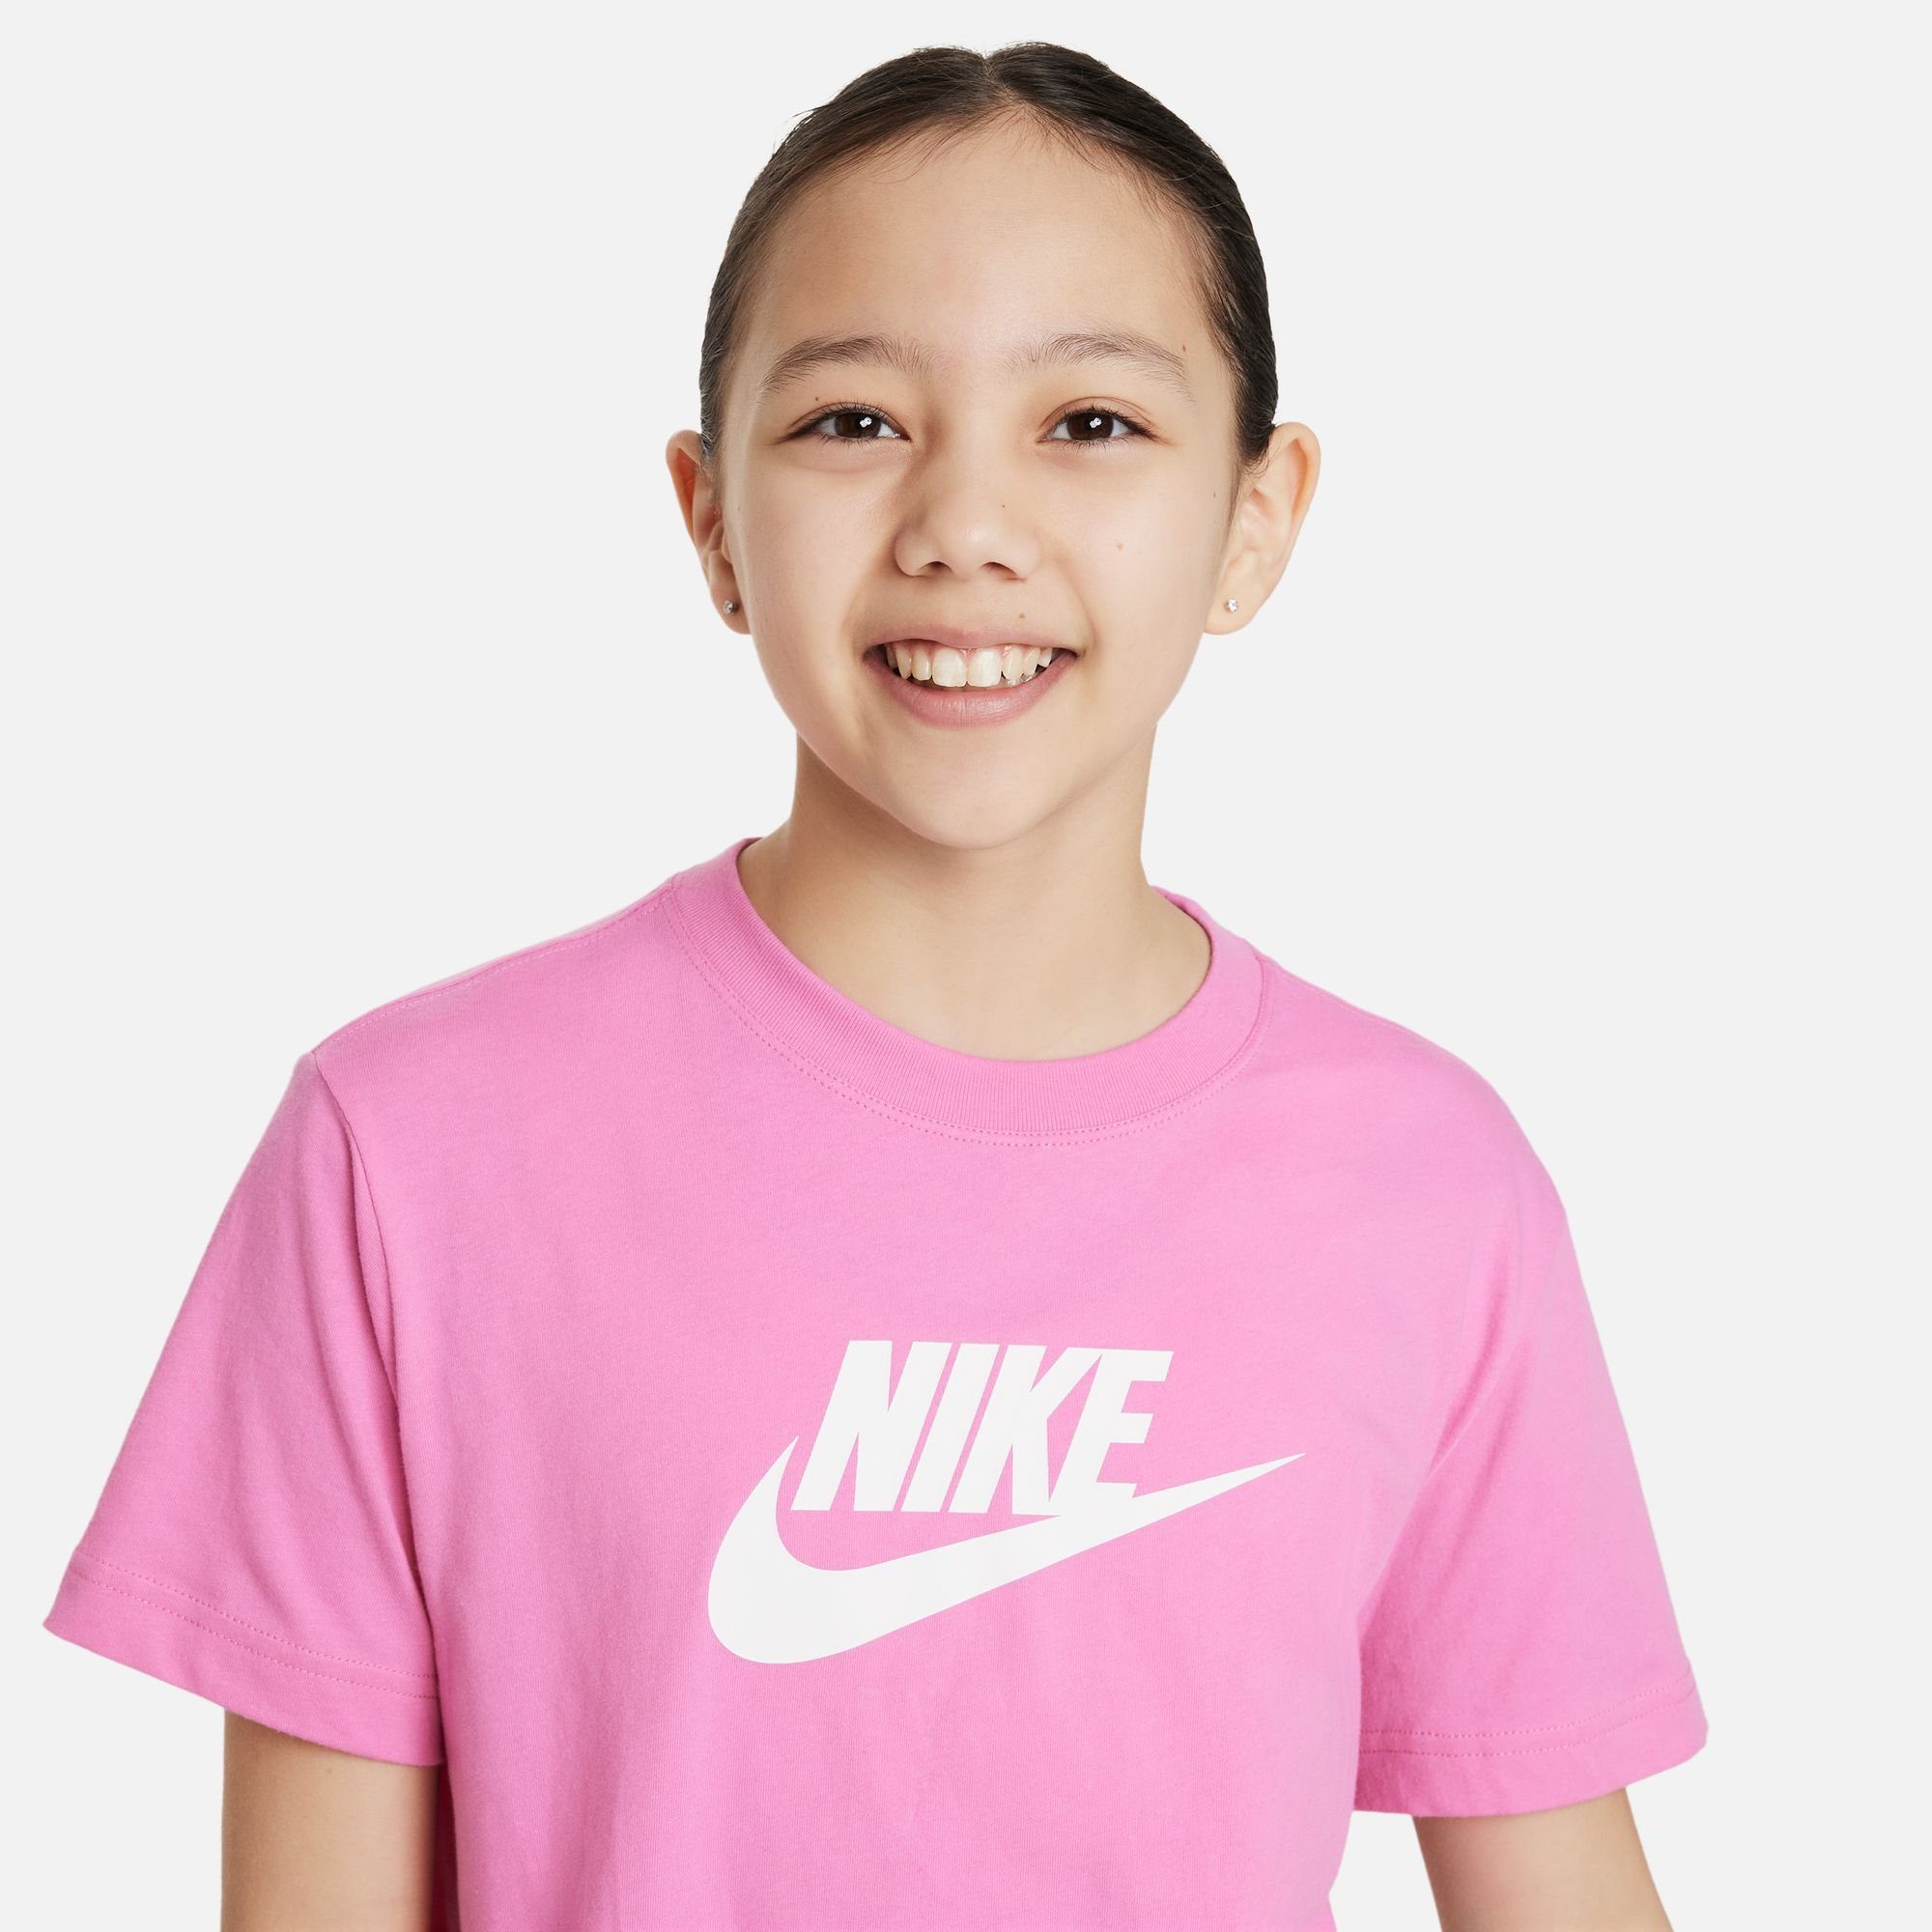 T-Shirt Nike (GIRLS) PLAYFUL BIG T-SHIRT Sportswear PINK KIDS'